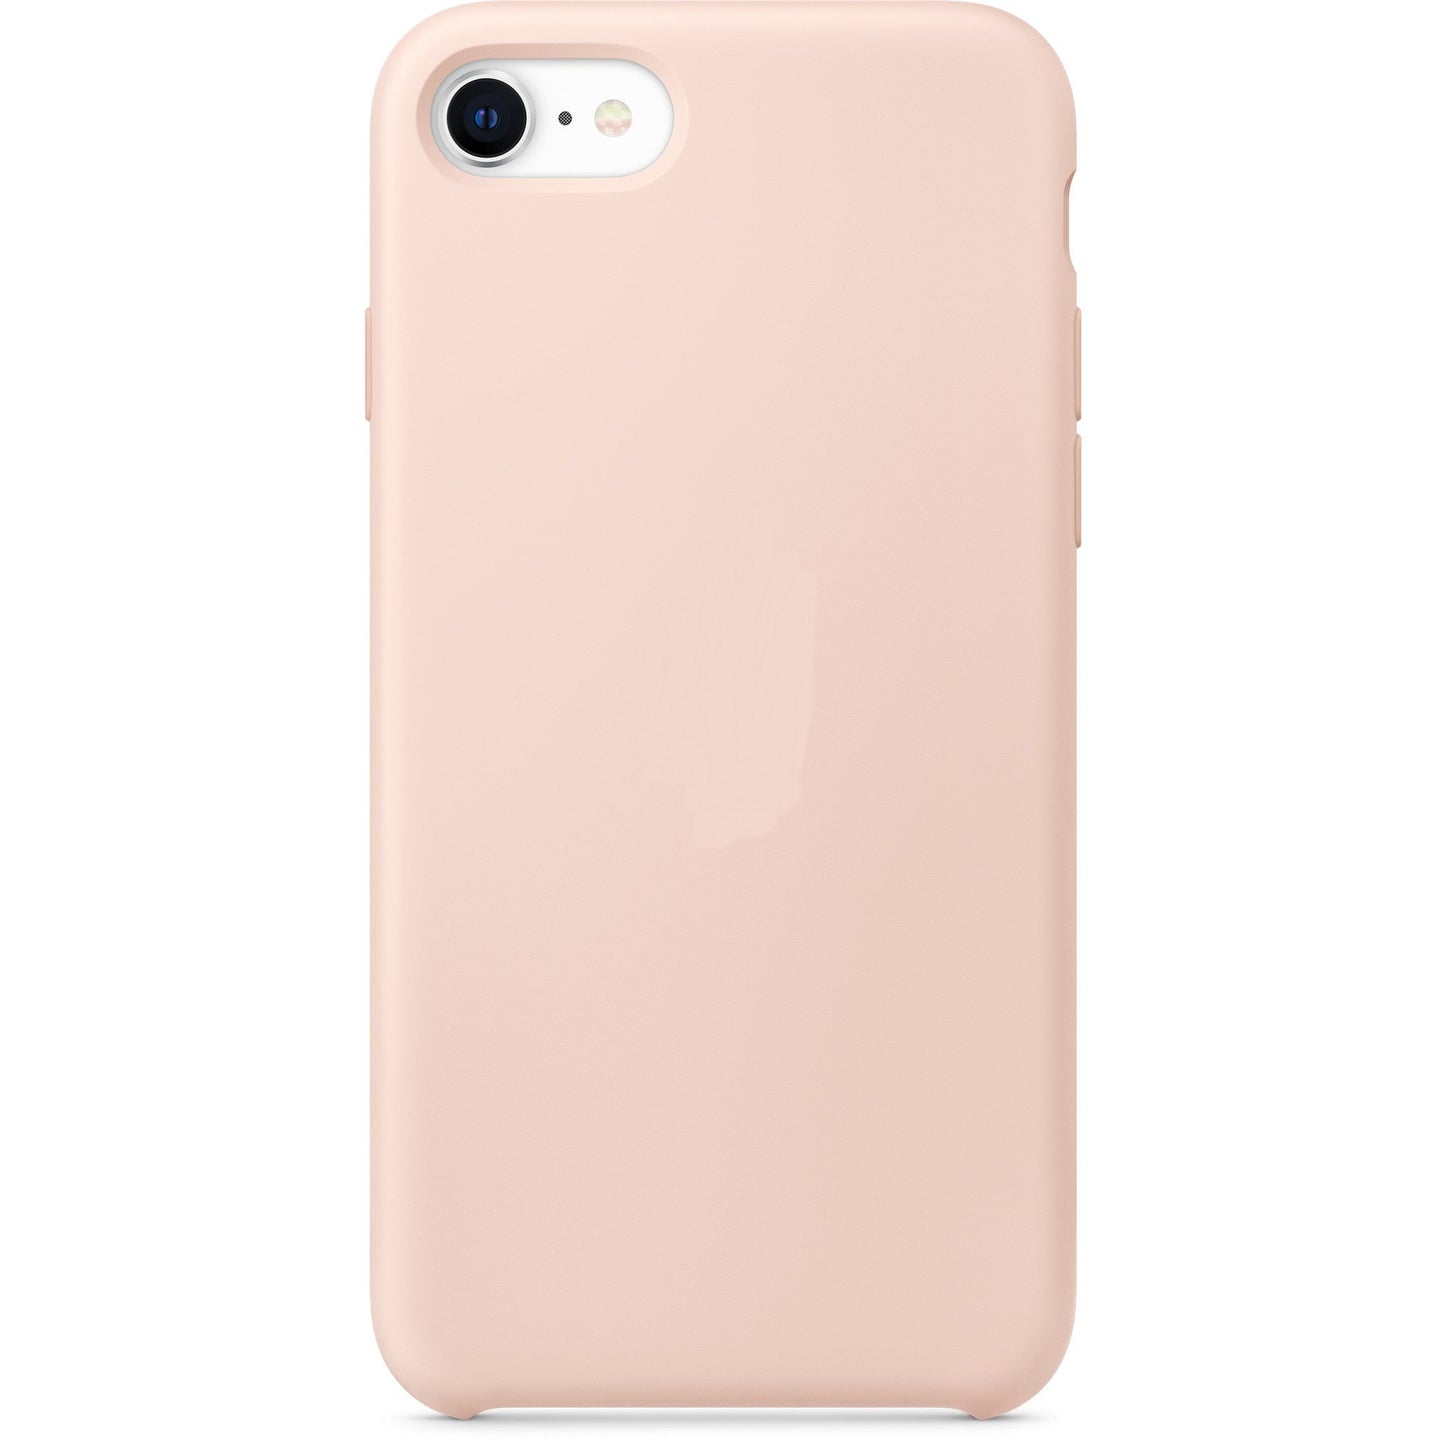 Melkco - iPhone 6 / 6s / 7 / 8 / SE - Sand Pink